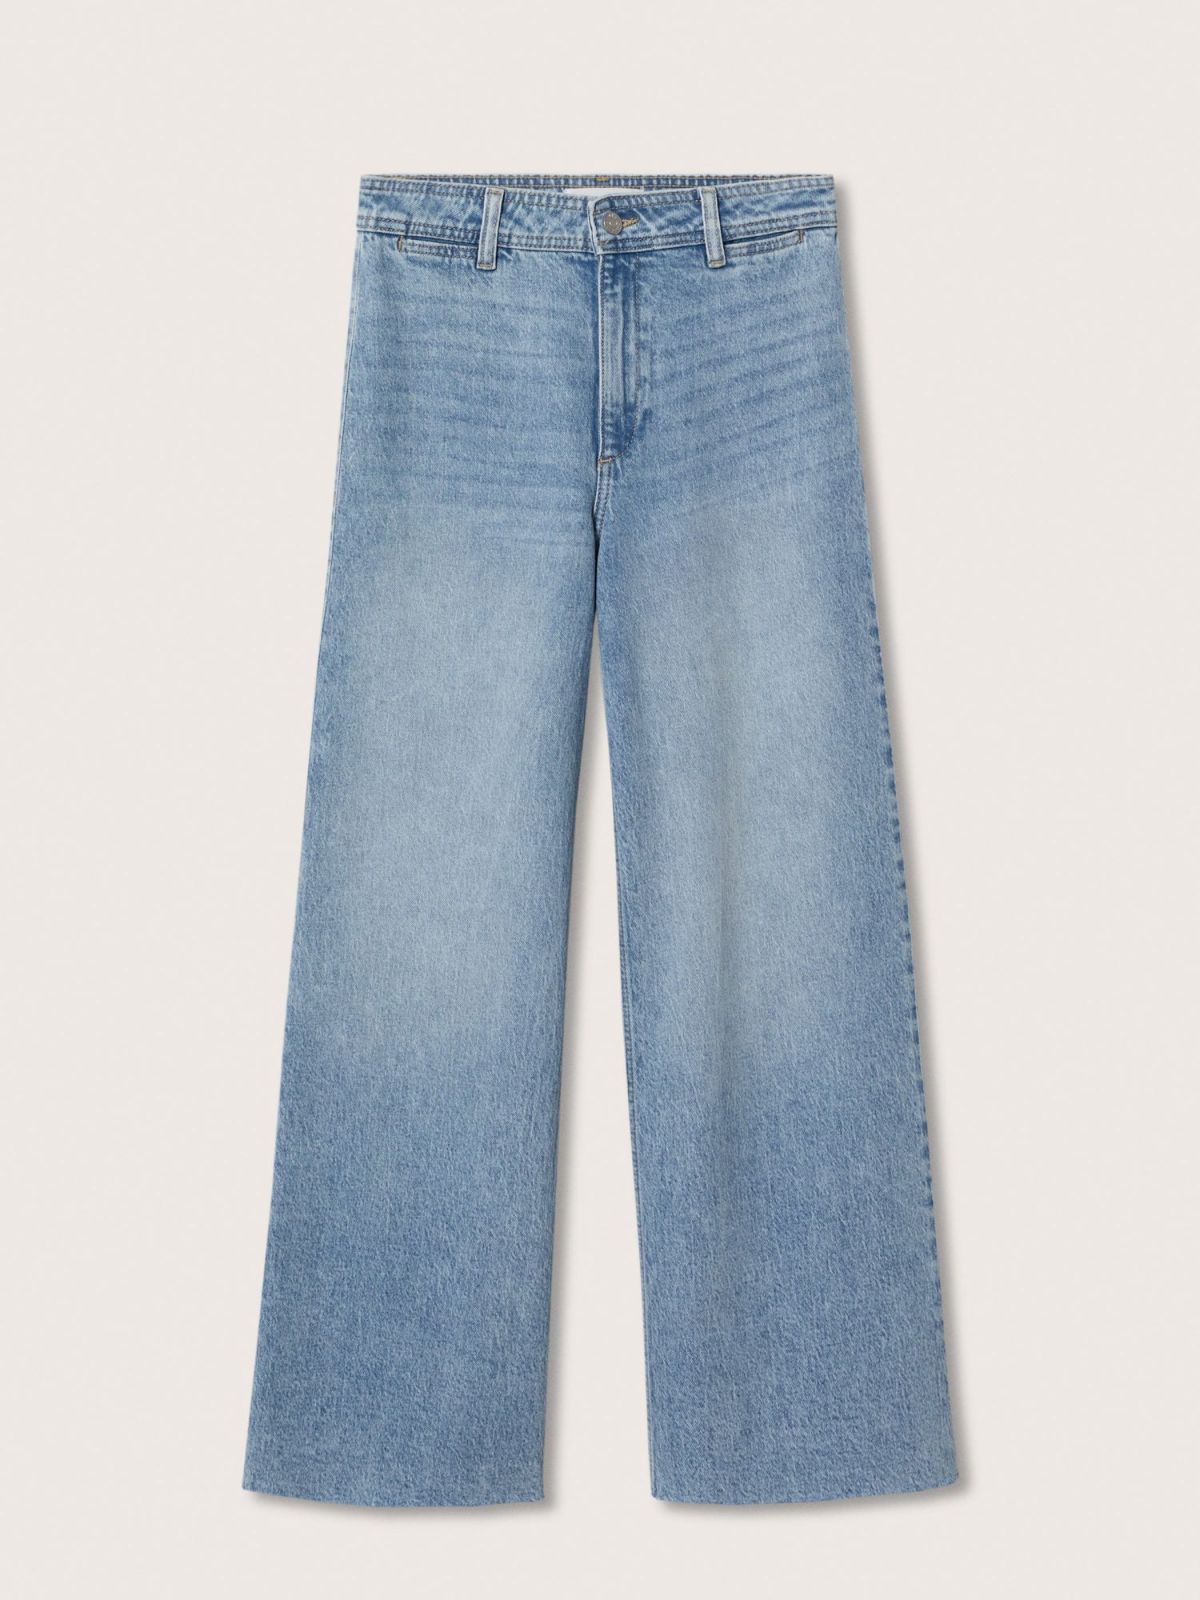   Catherin ג'ינס ארוך בגזרה מתרחבת של MANGO